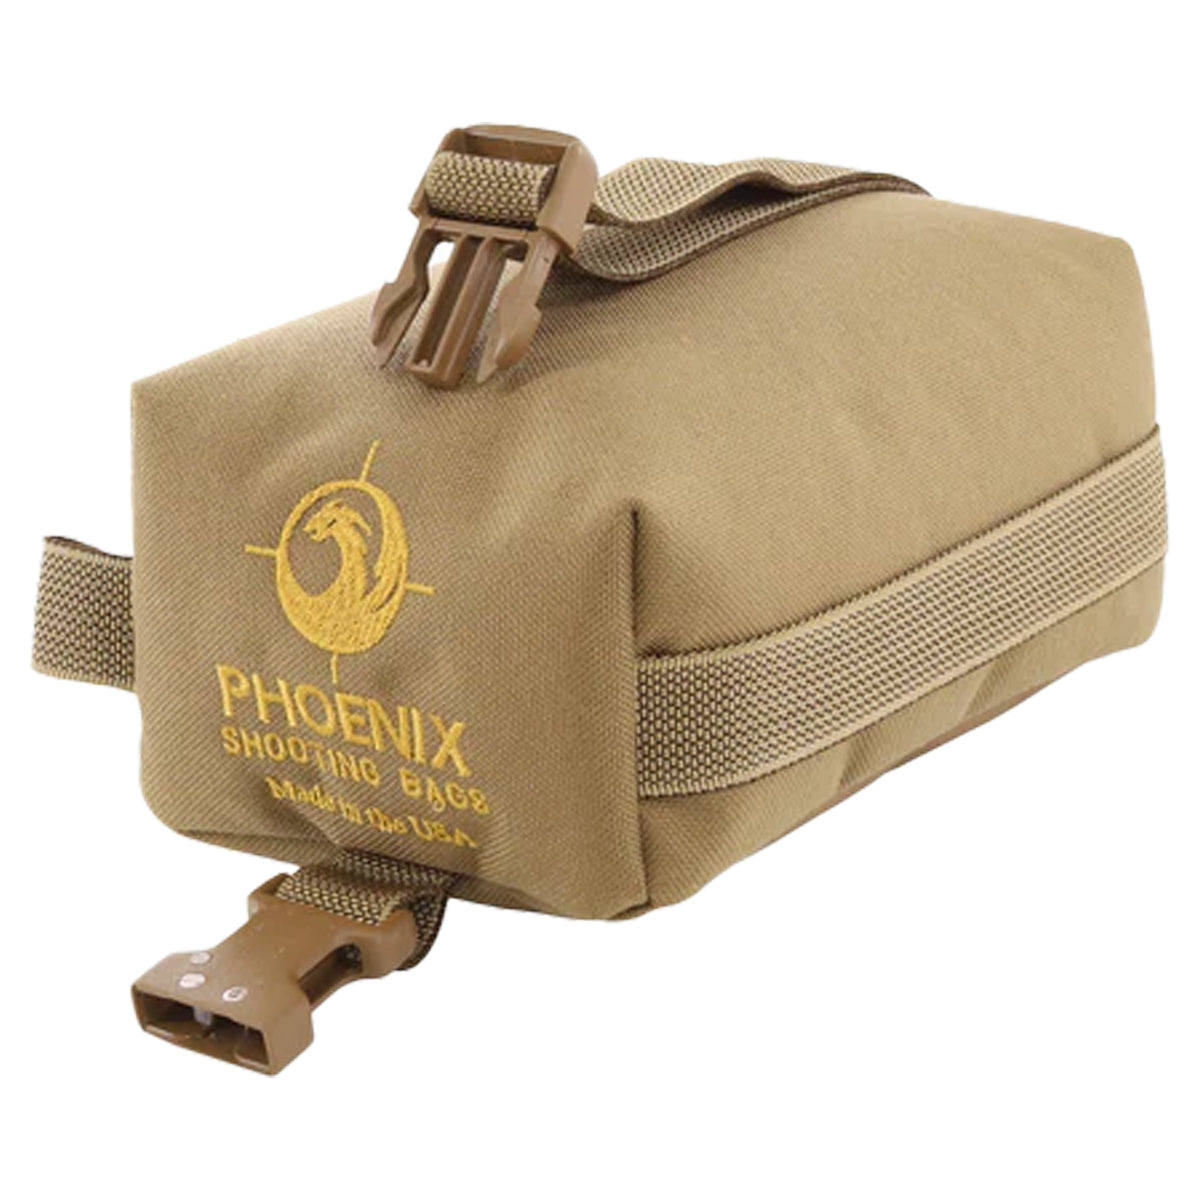 Phoenix Shooting Bags X-Small Rear Bag in Coyote by GOHUNT | Phoenix Shooting Bags - GOHUNT Shop